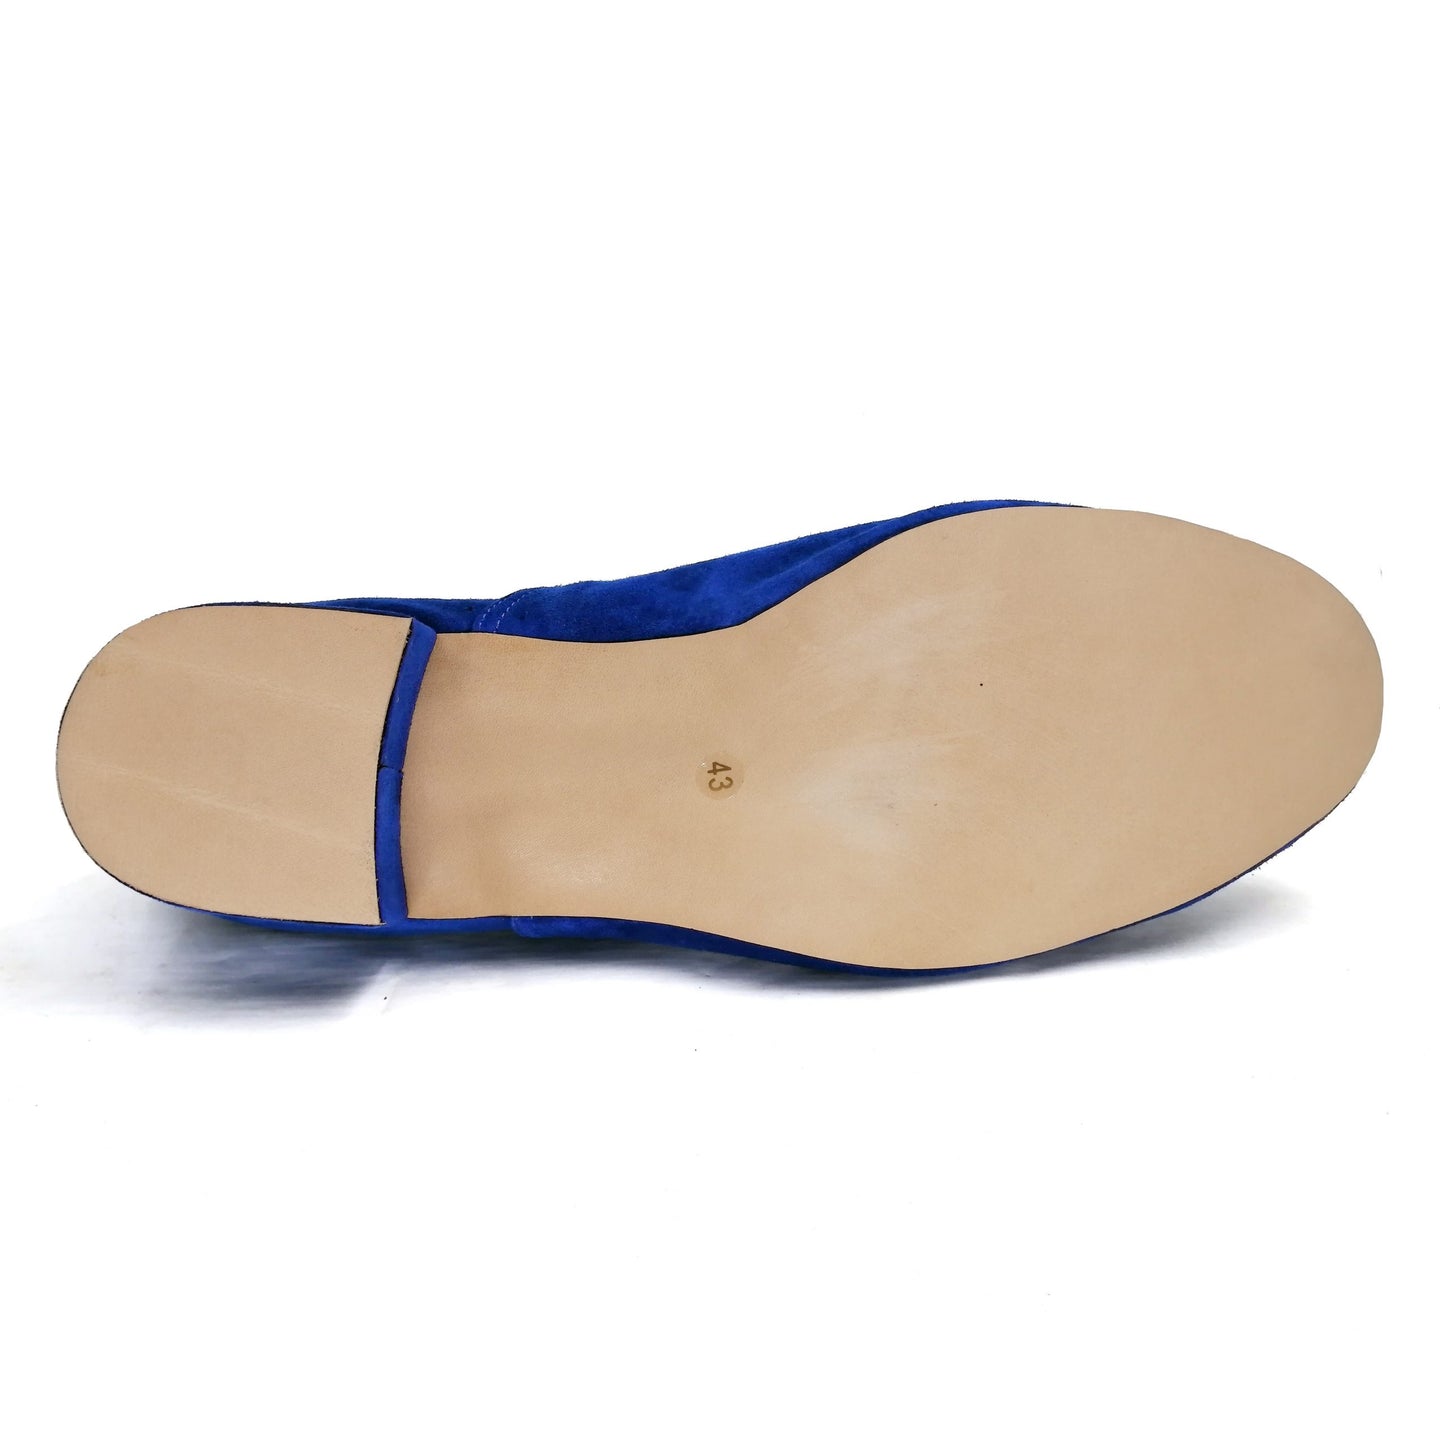 Pro Dancer Men's Argentine Tango Shoes Leather Sole 1 inch Heel Lace-up Blue (PD1002A)